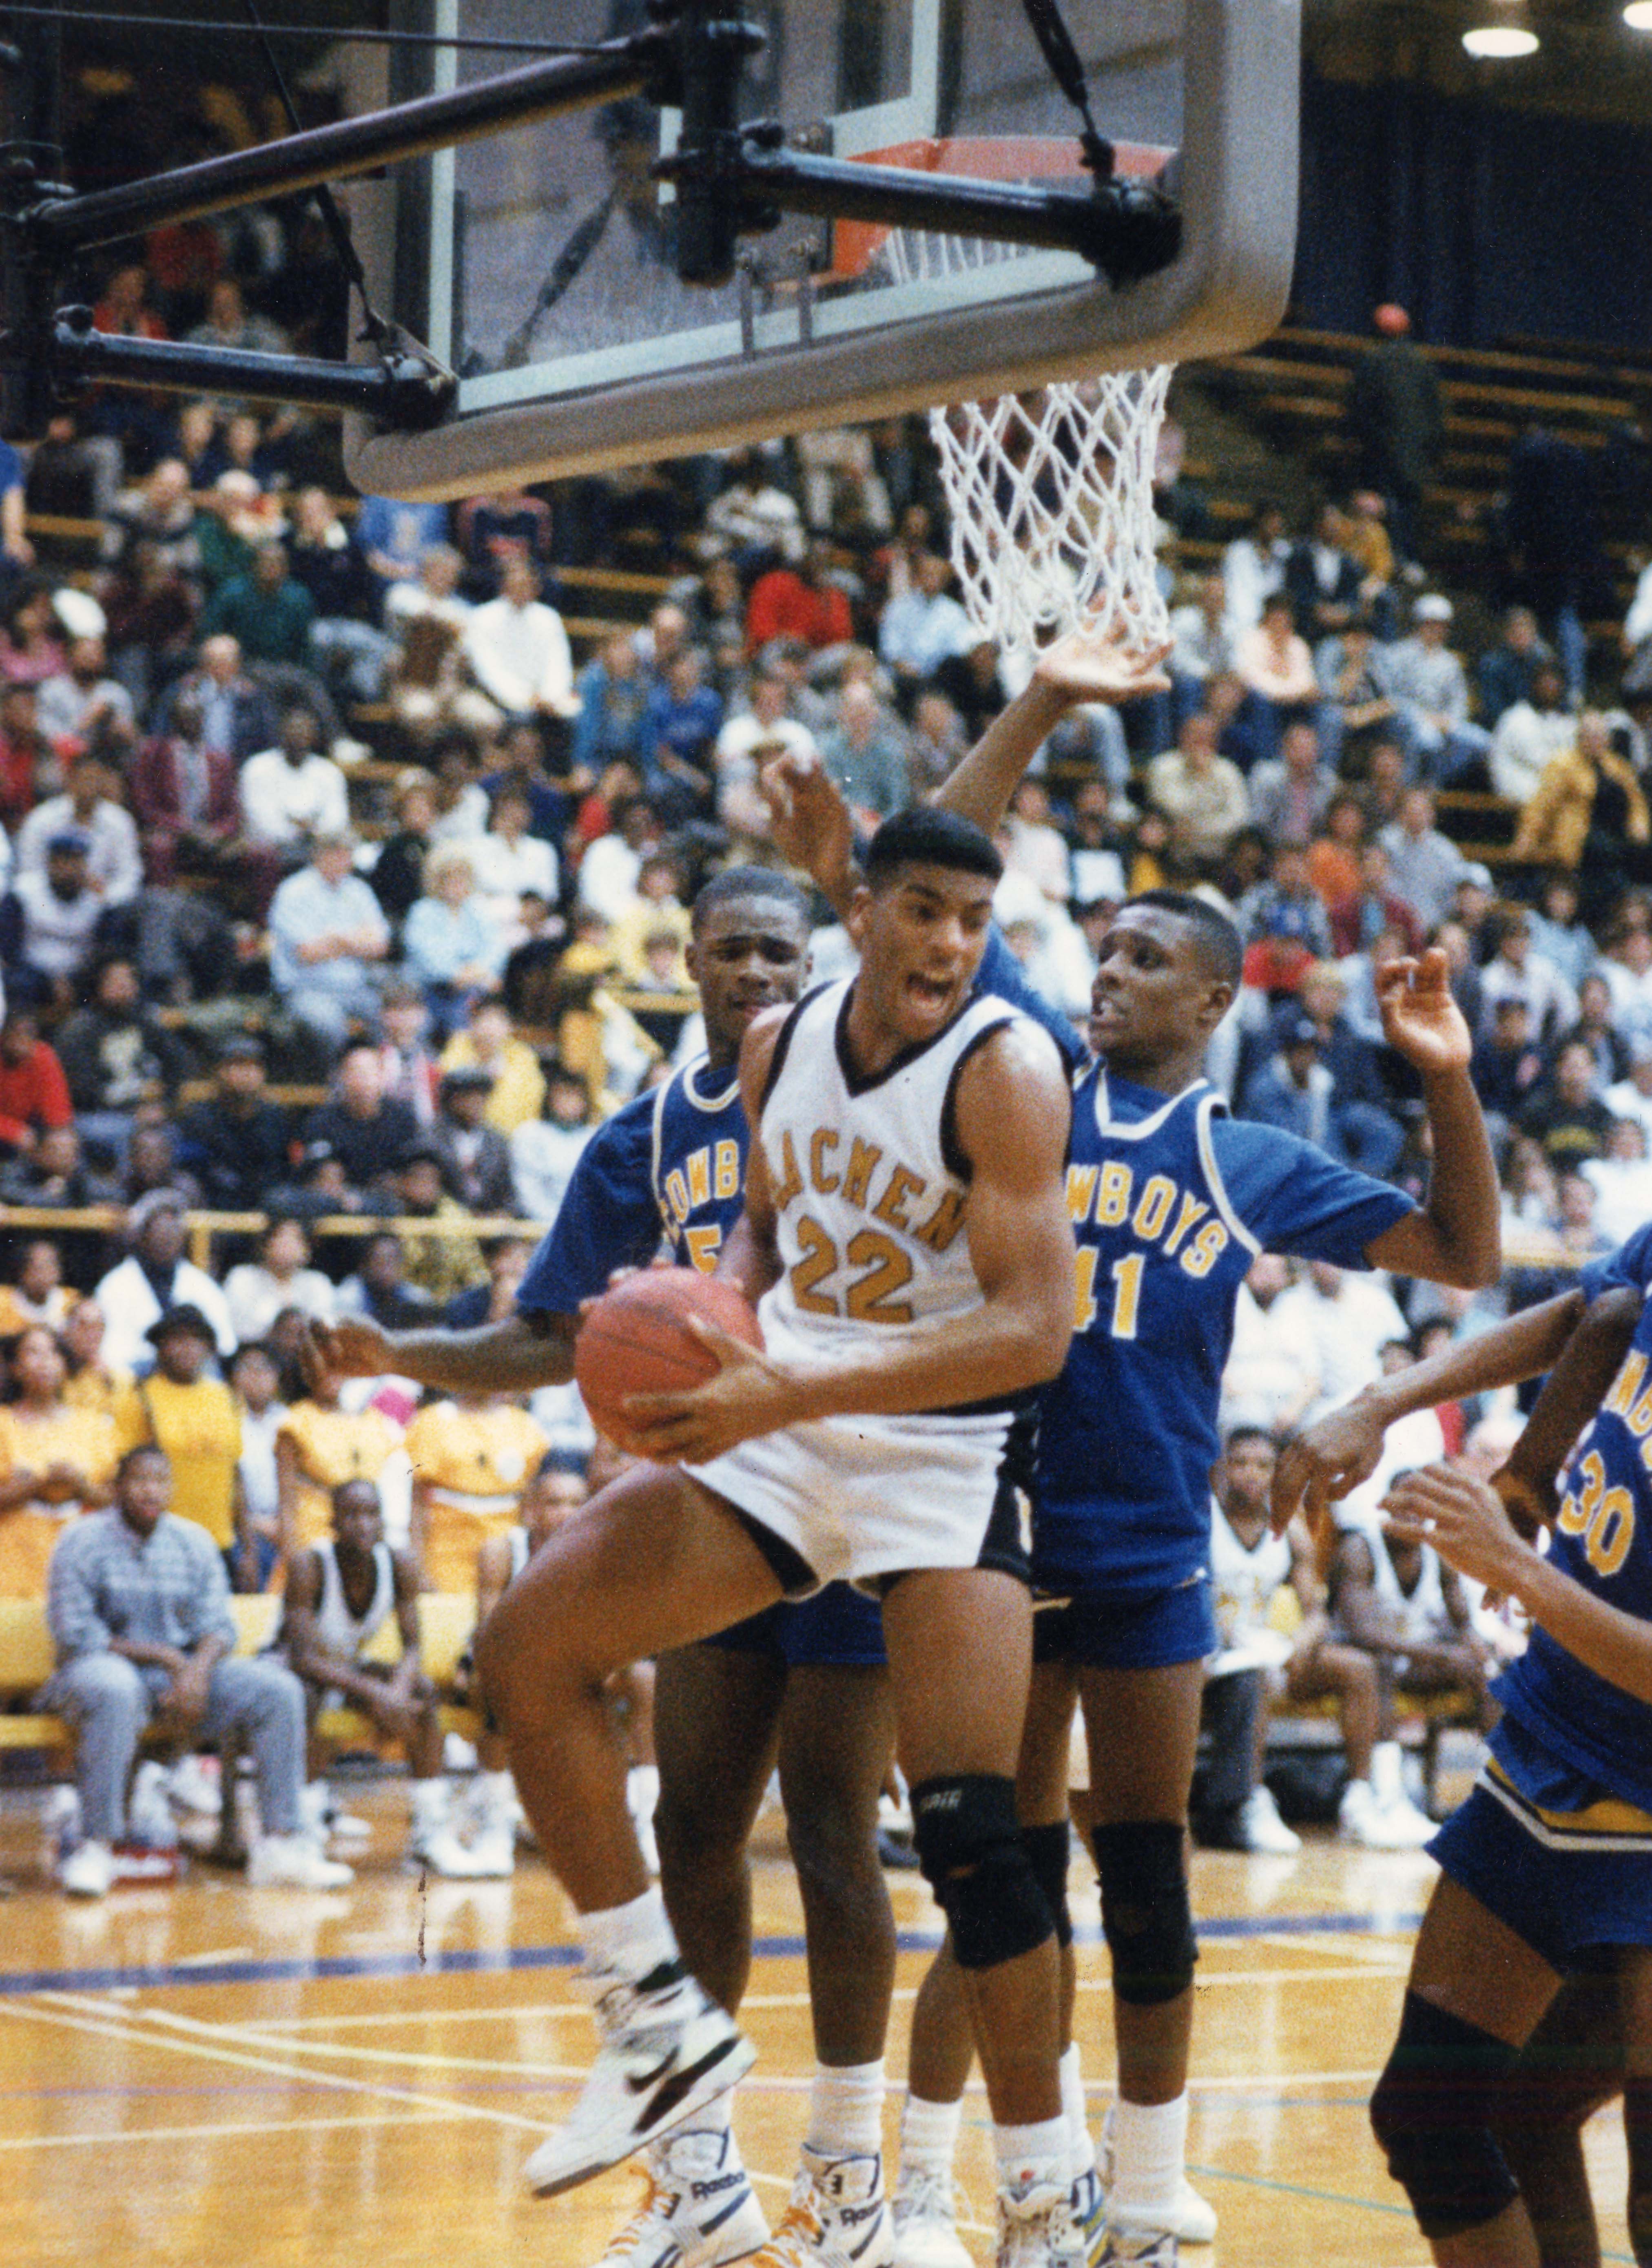 This week in Toledo sports history: Jim Jackson named Mr. Basketball